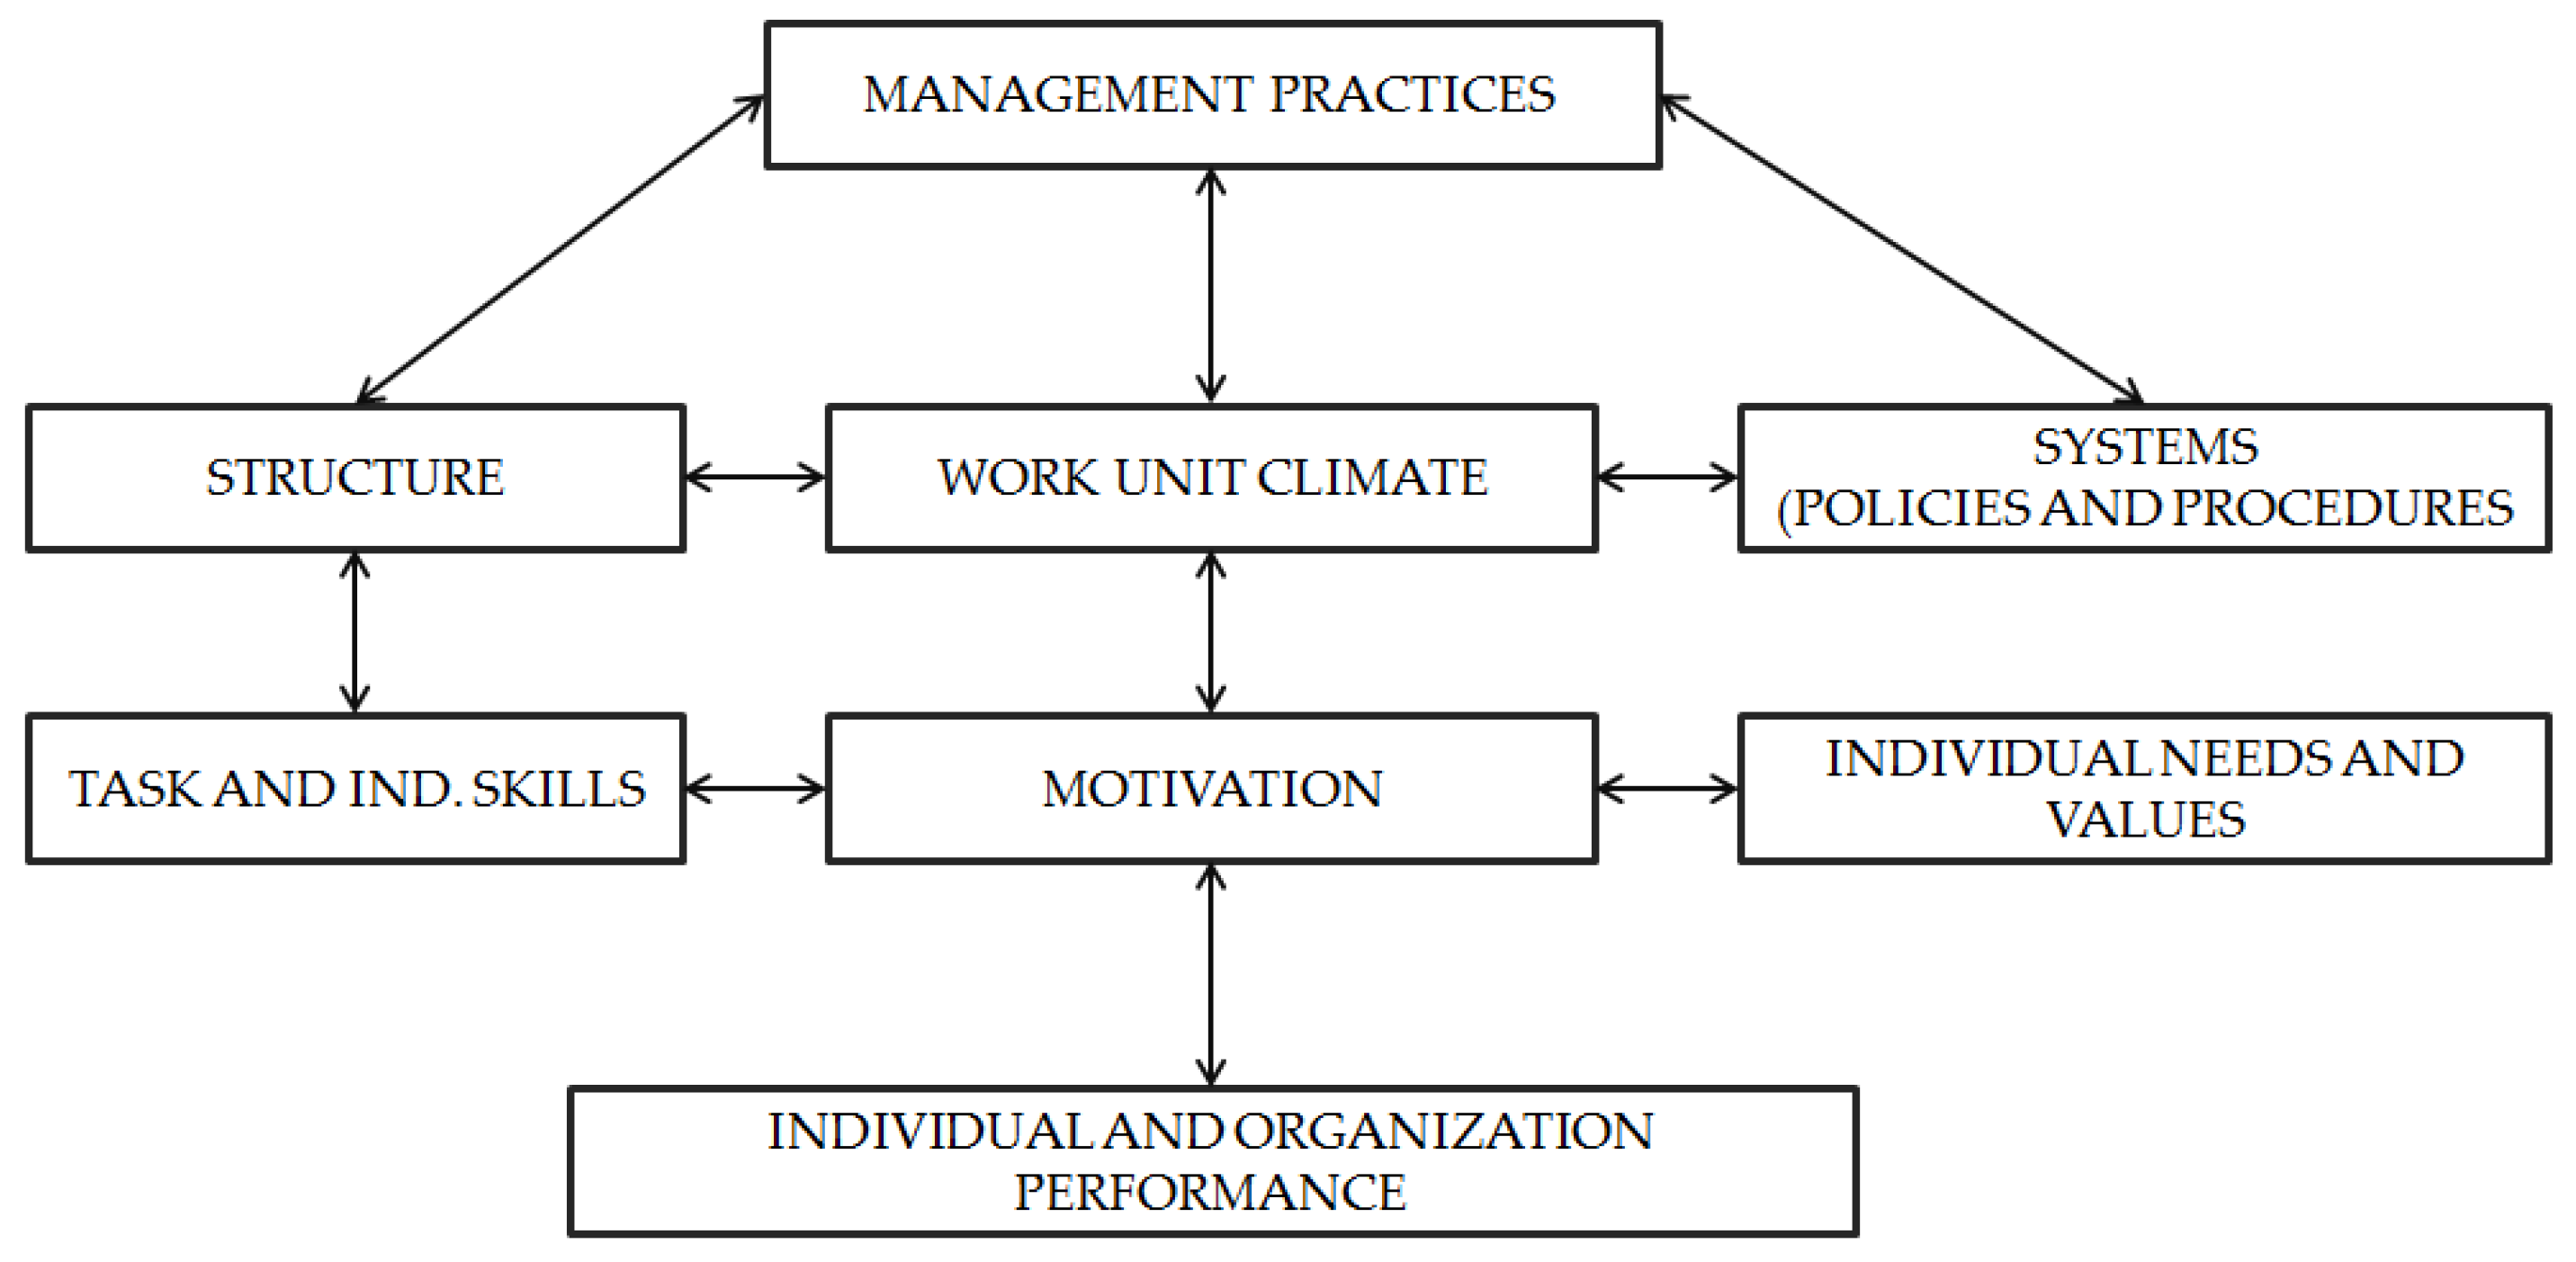 the burke litwin model of organizational change